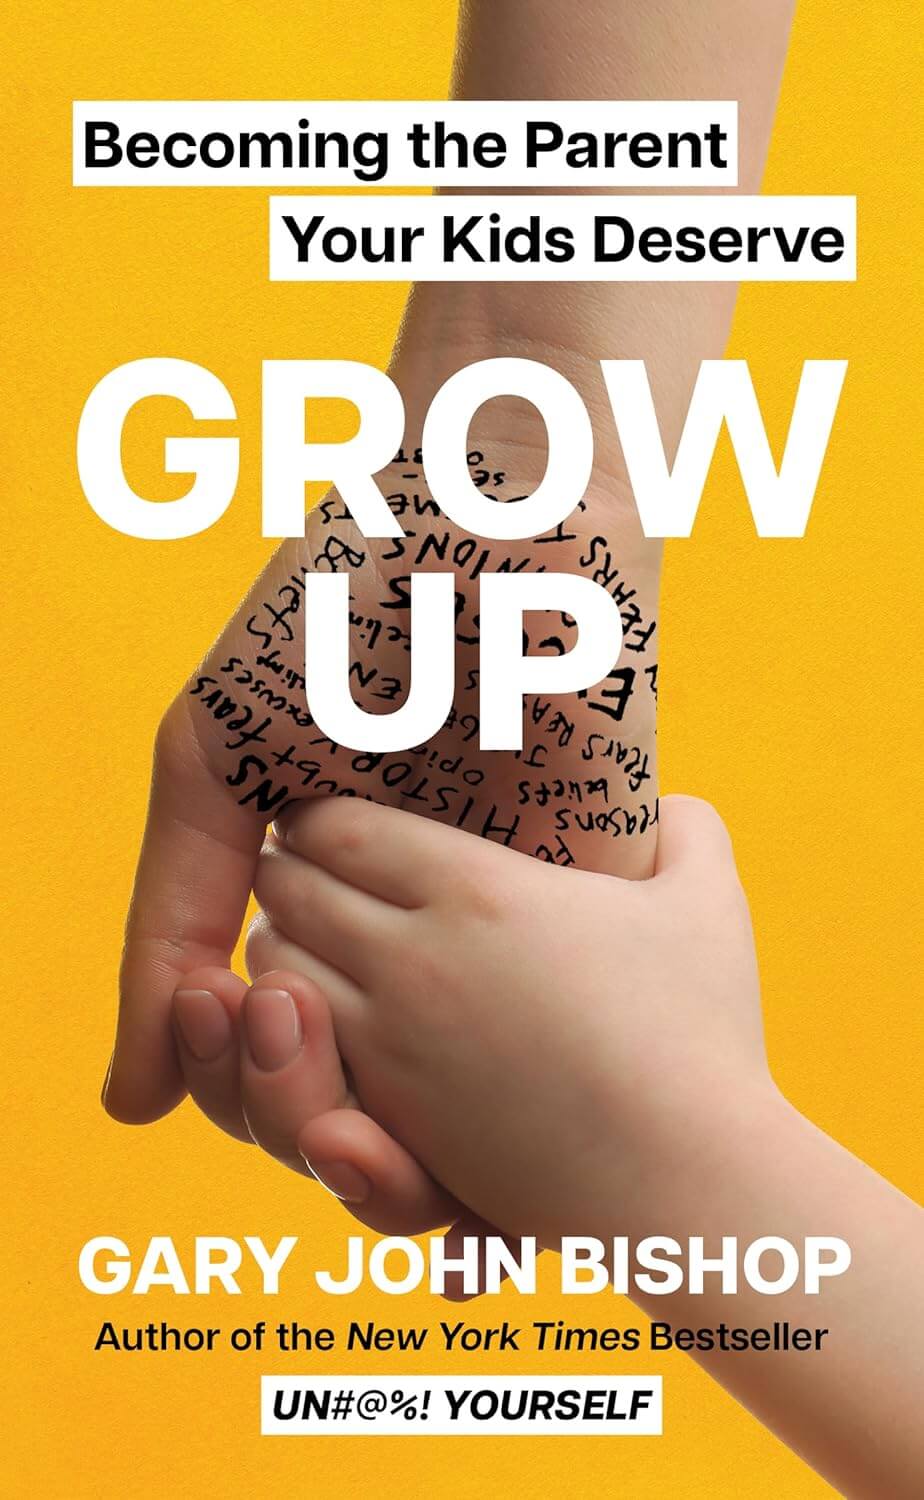 Grow Up: Becoming the Parent Your Kids Deserve